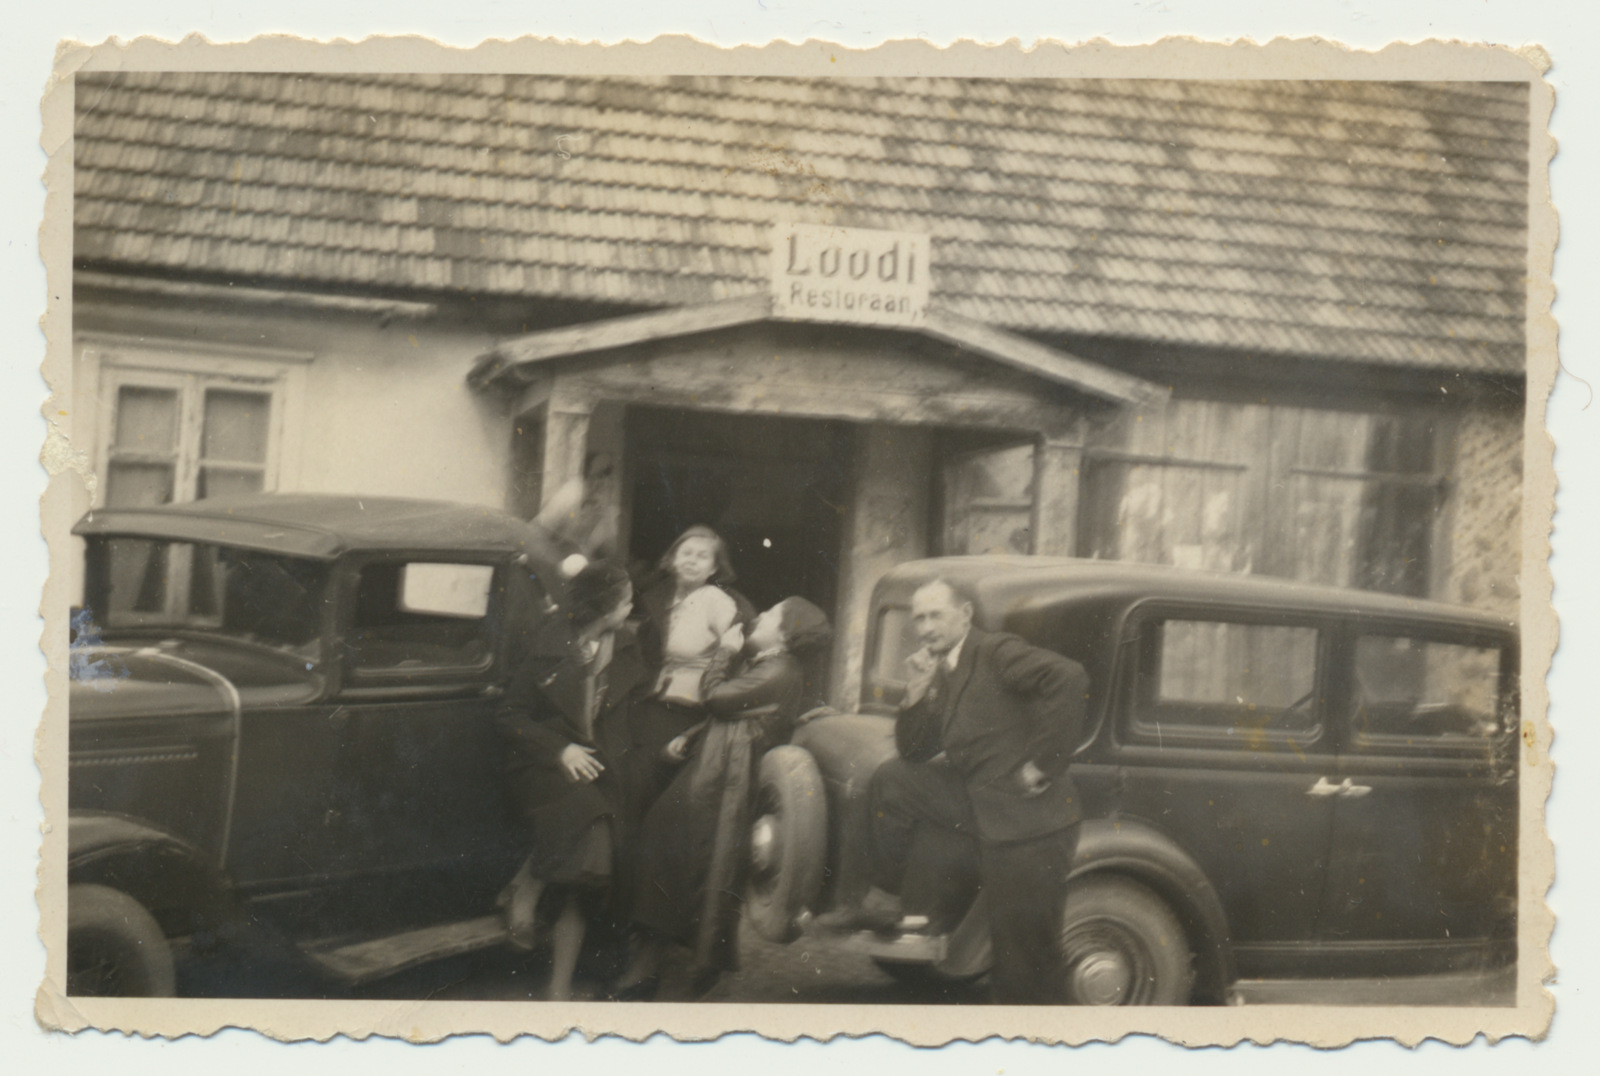 foto, Viljandimaa, Loodi restoran, 1937